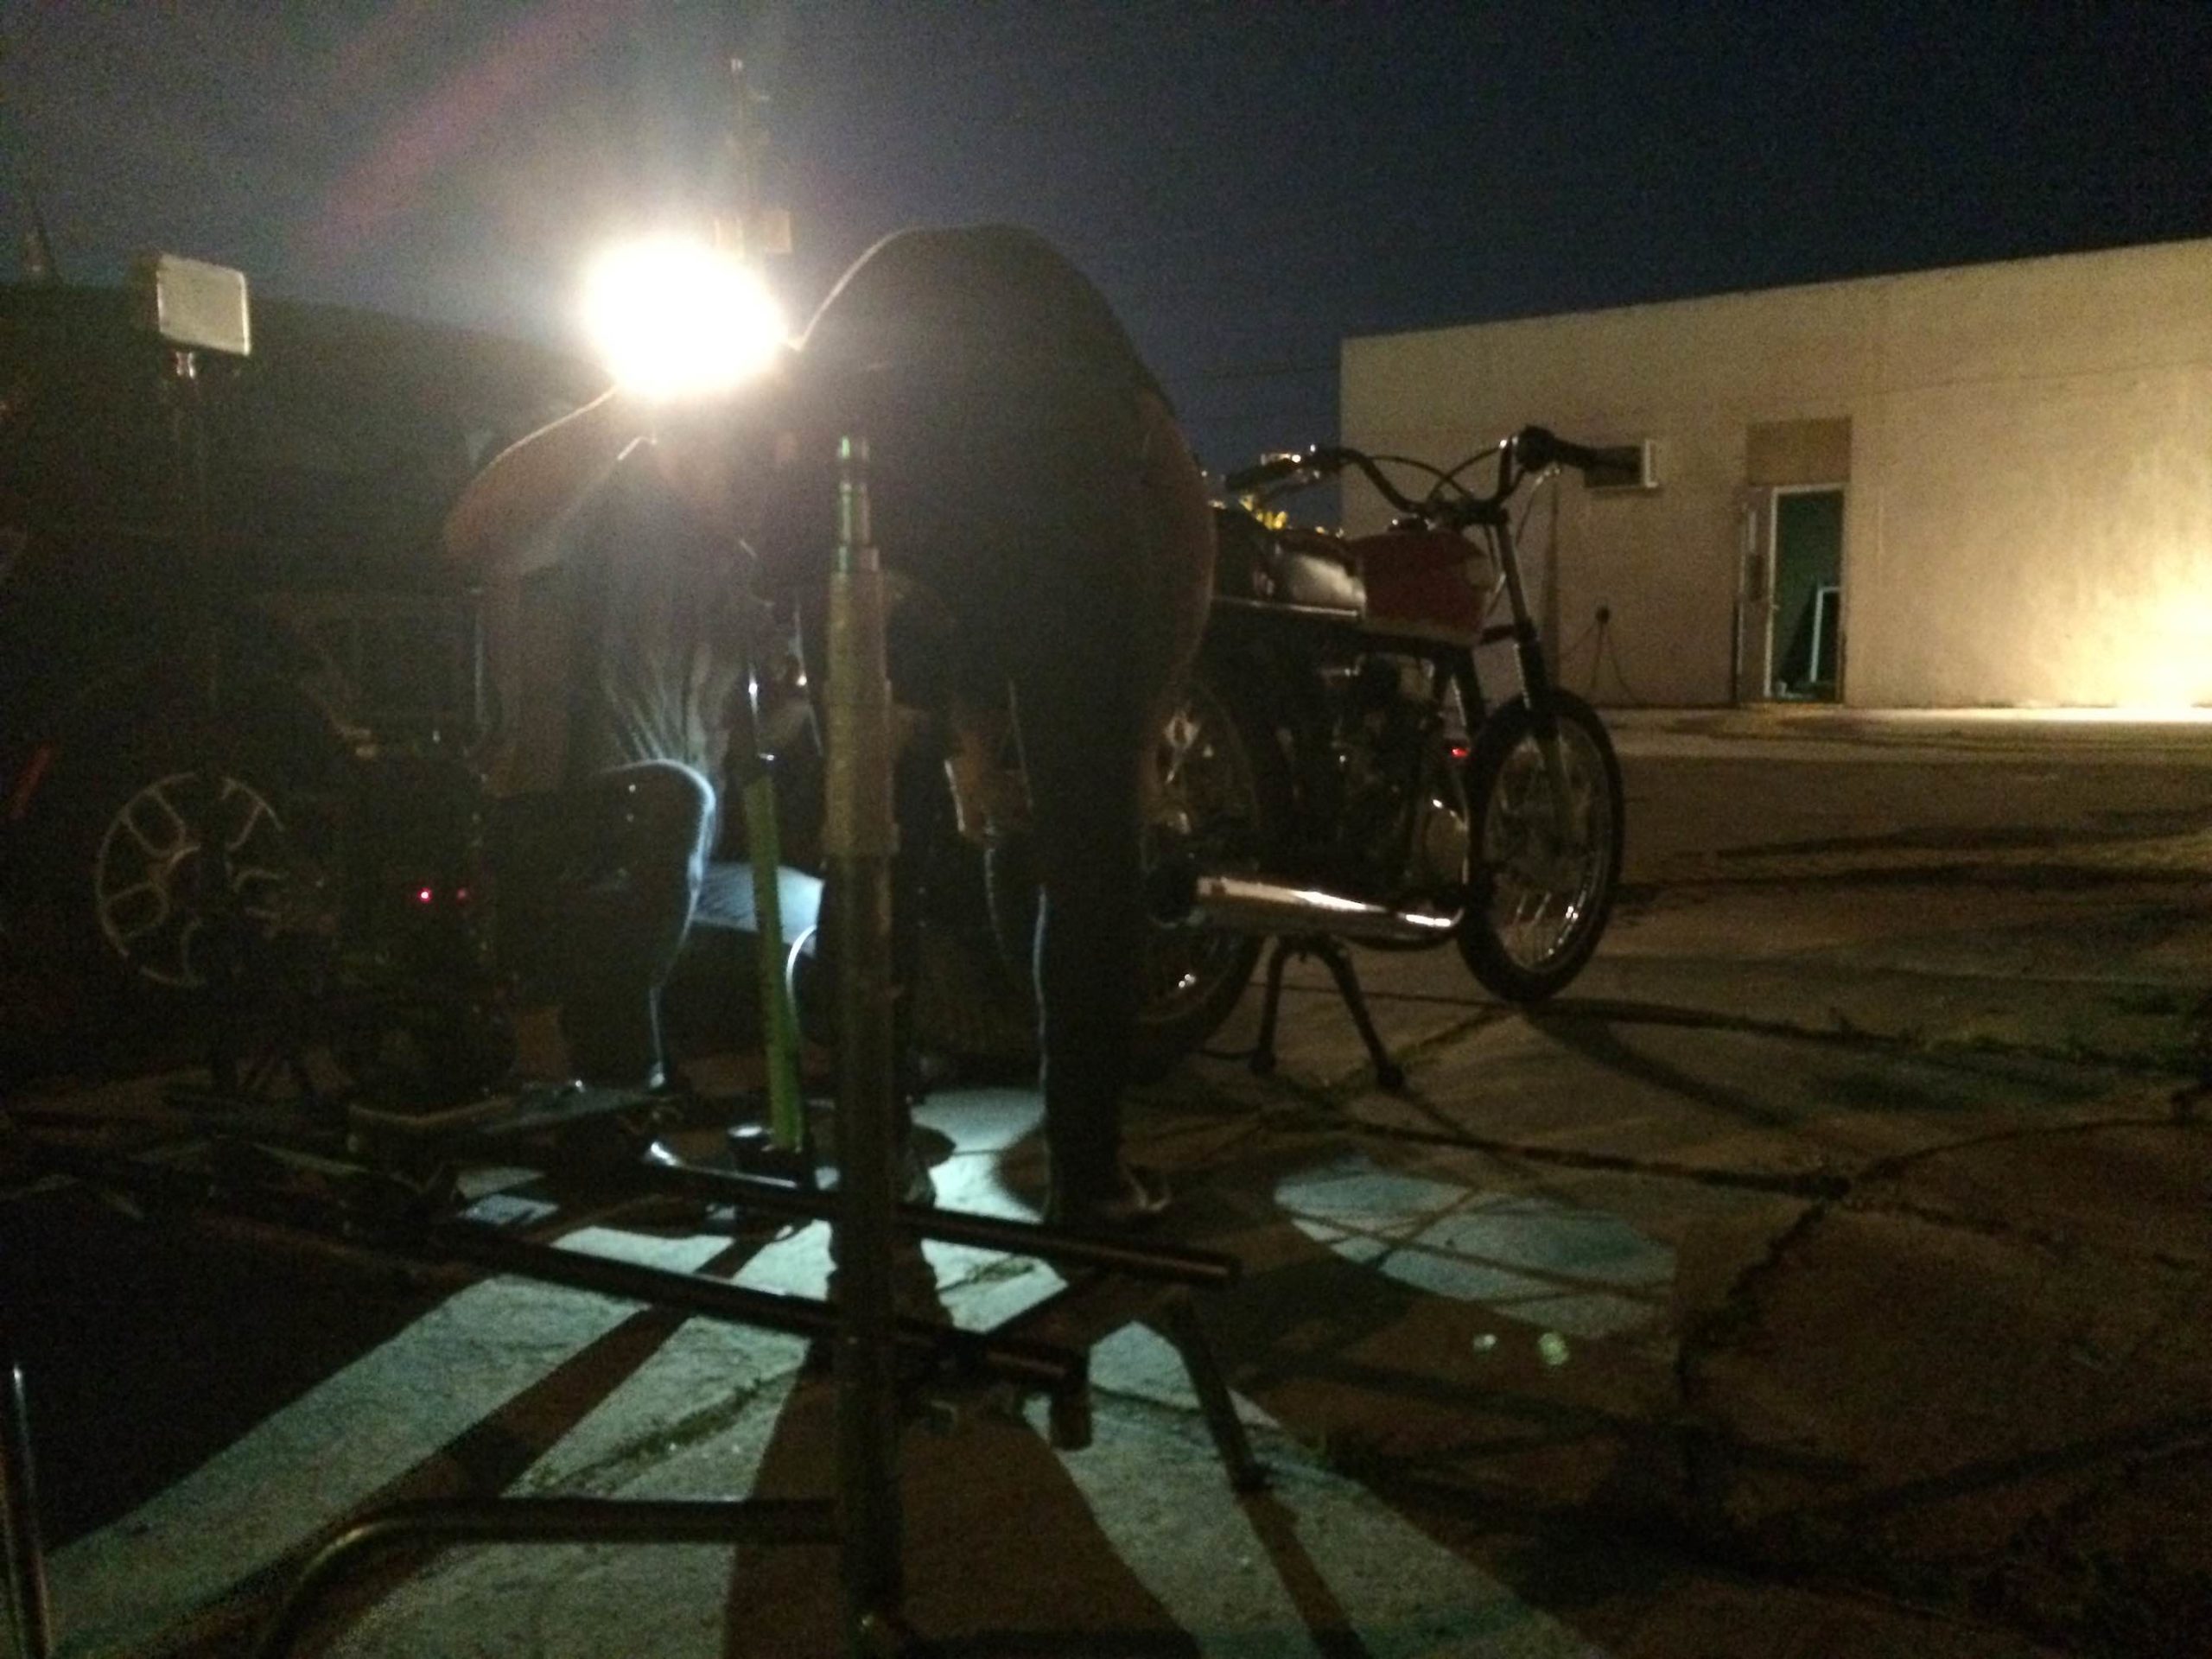 IU C&I Studios Portfolio Hard Rock Energy BTS Crew members working near motorcycle in the dark with a light